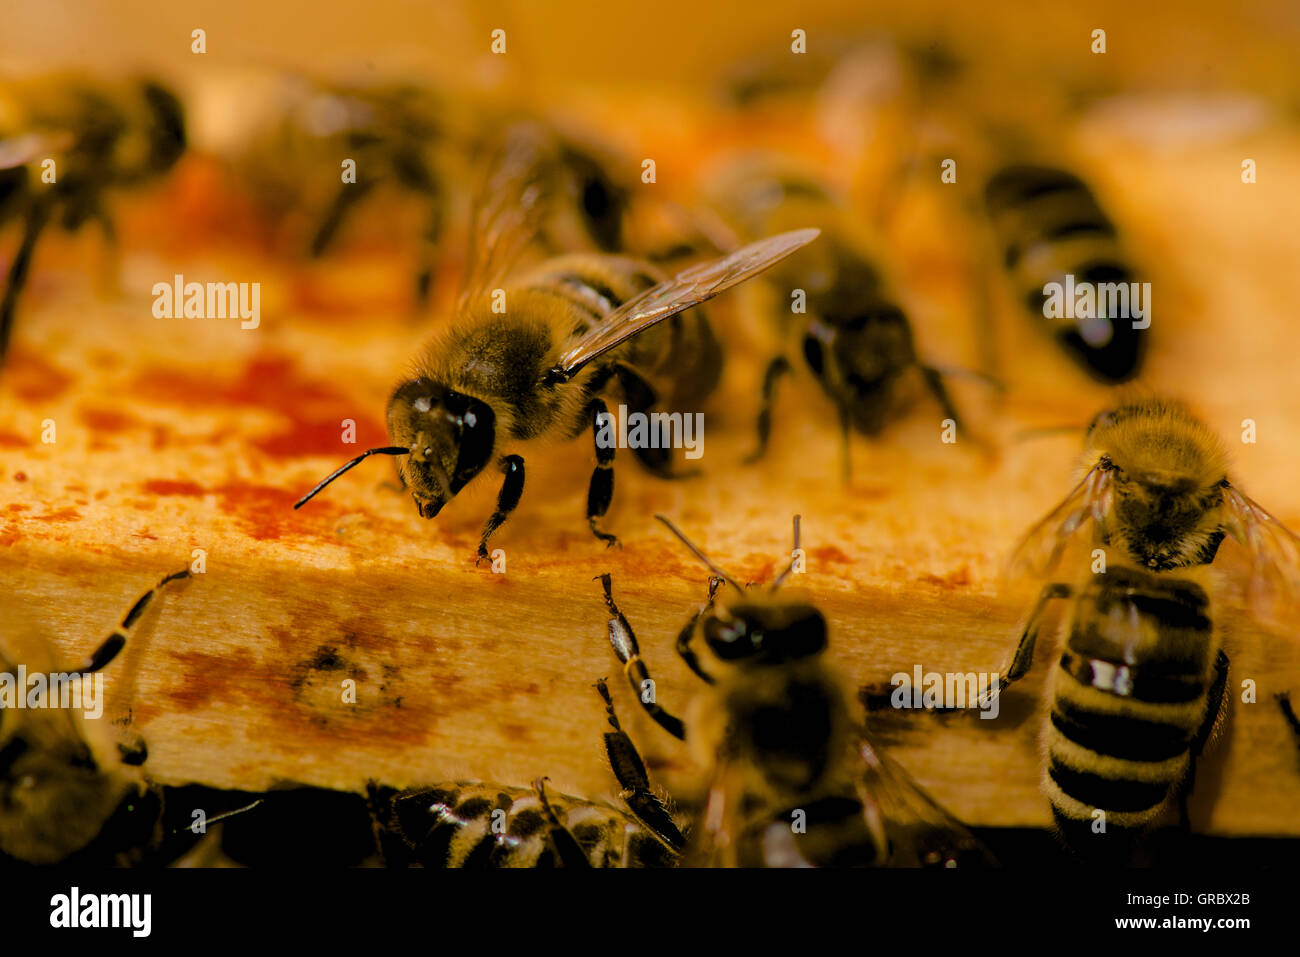 En panal de abejas bulliciosa fotogramas Foto de stock